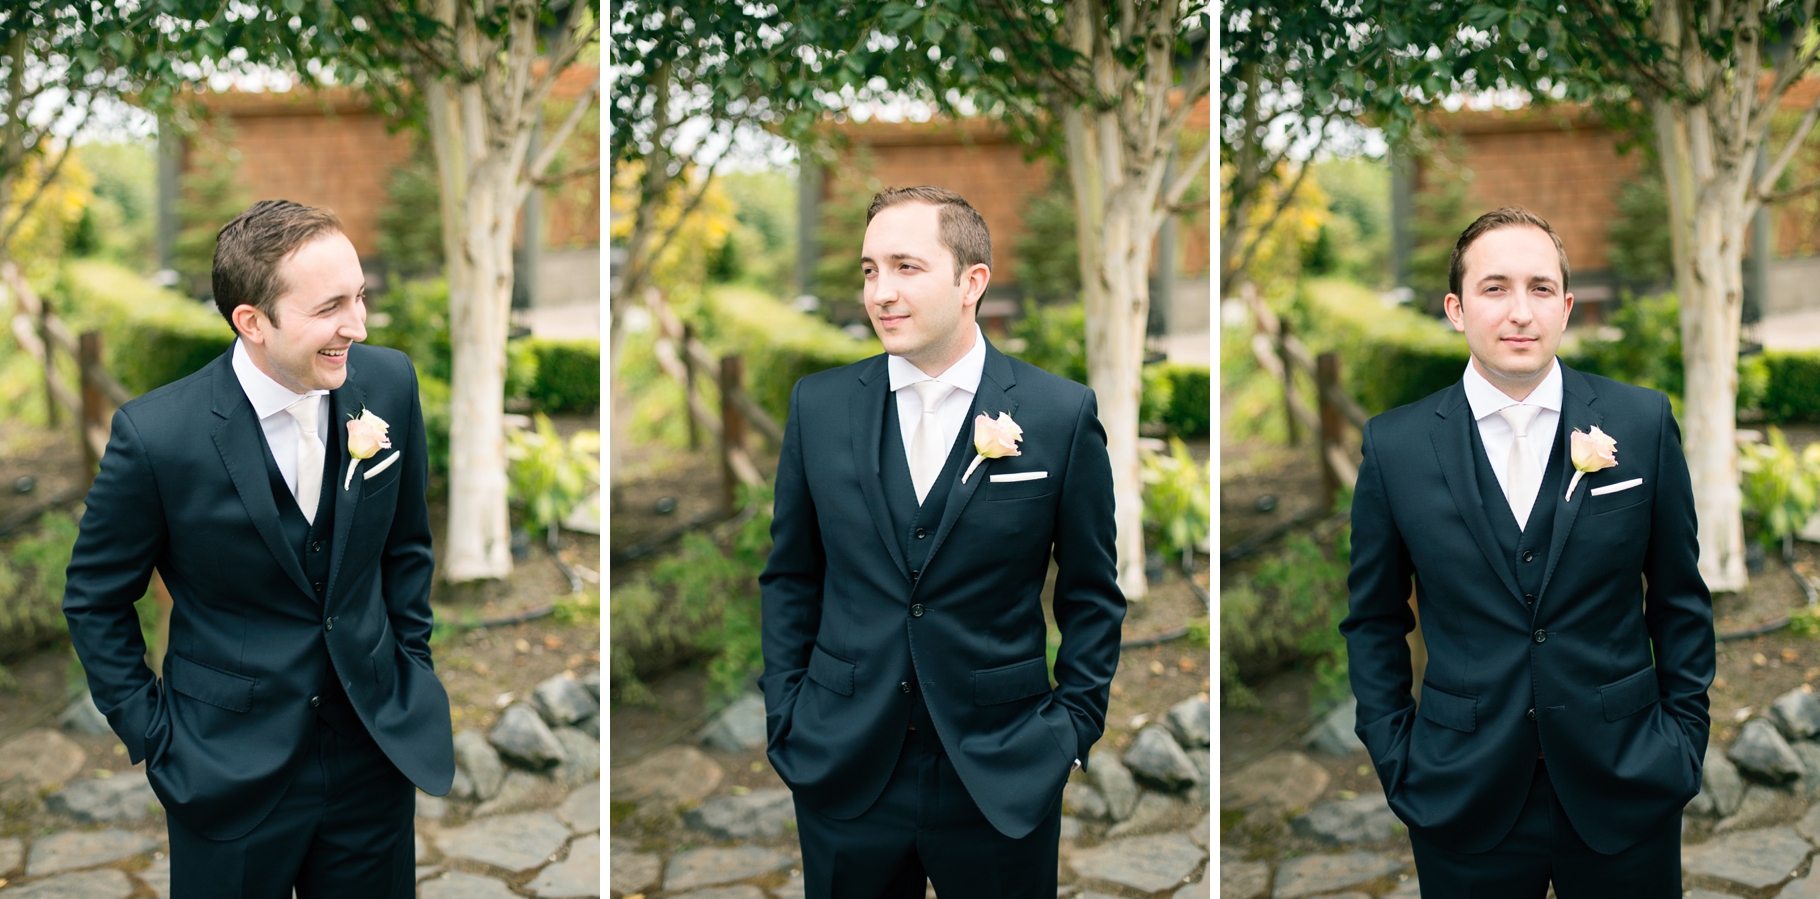 18-Groom-Portraits-Suit-Groom-Style-Navy-Tuxedo-Club-Hidden-Meadows-Snohomish-Wedding-Photographer-Northwest-Seattle-Photography-by-Betty-Elaine